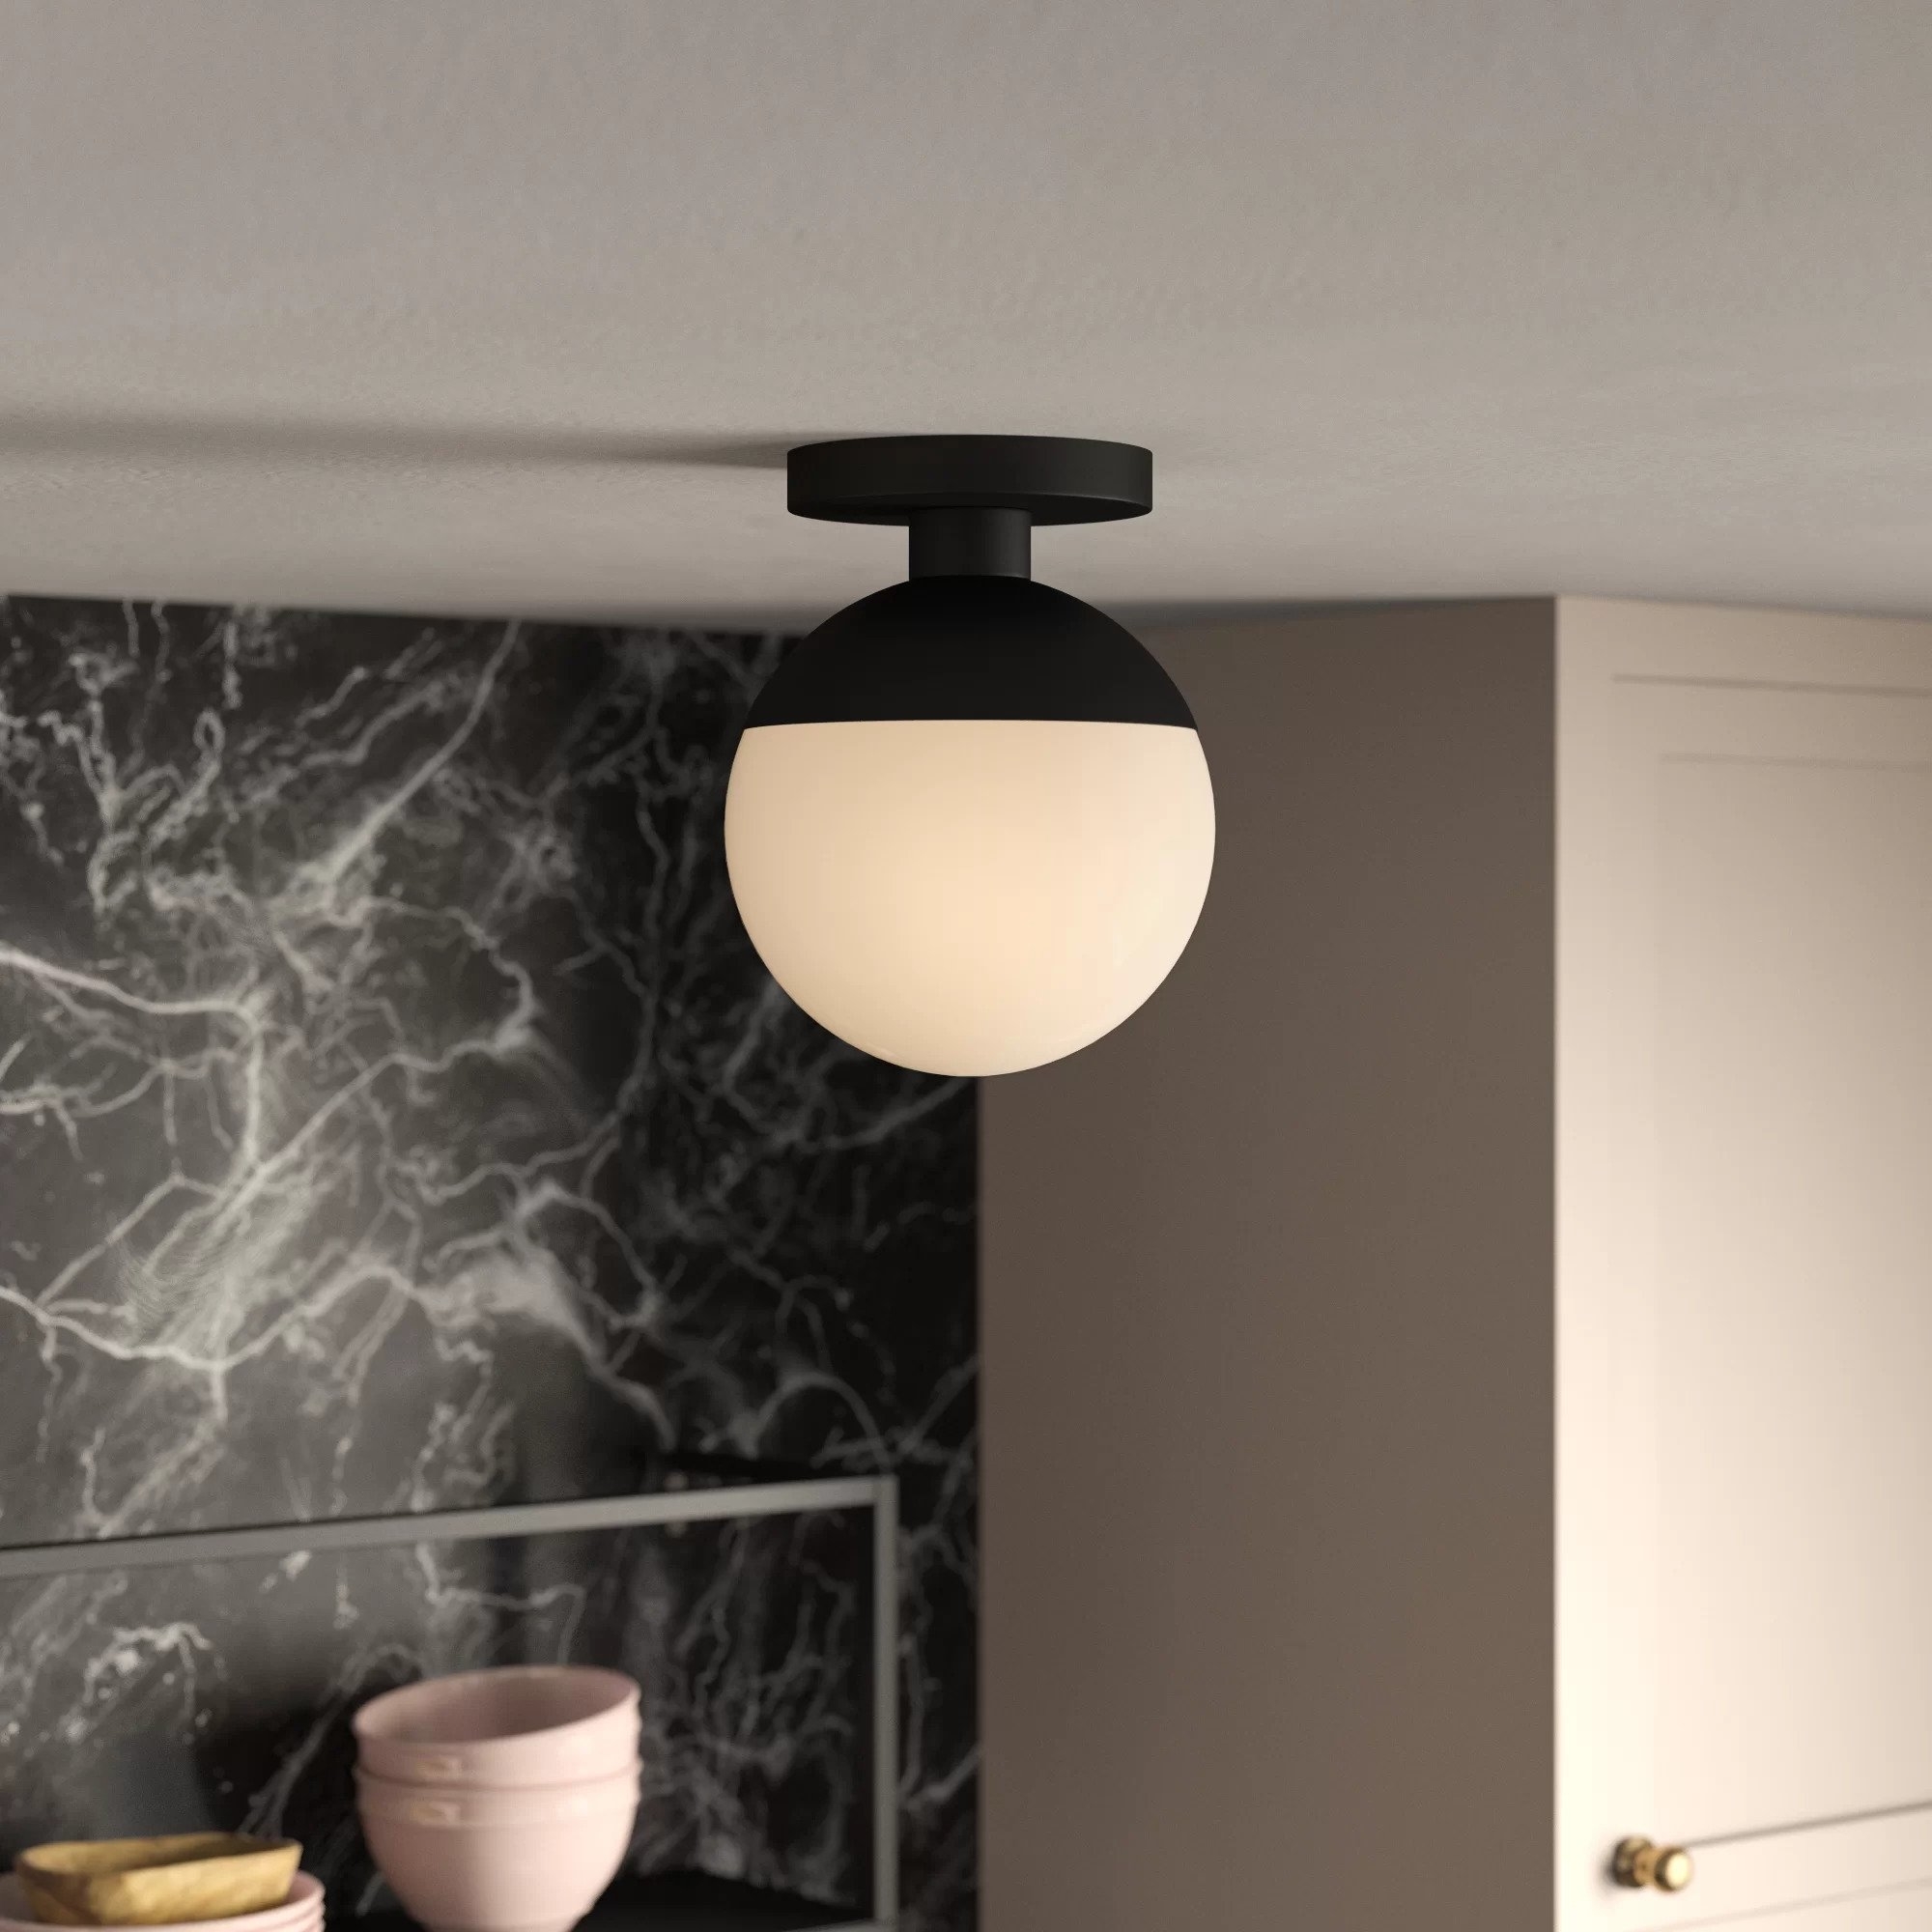 The semi-flush mount light, featuring a matte black metal base and matte glass globe